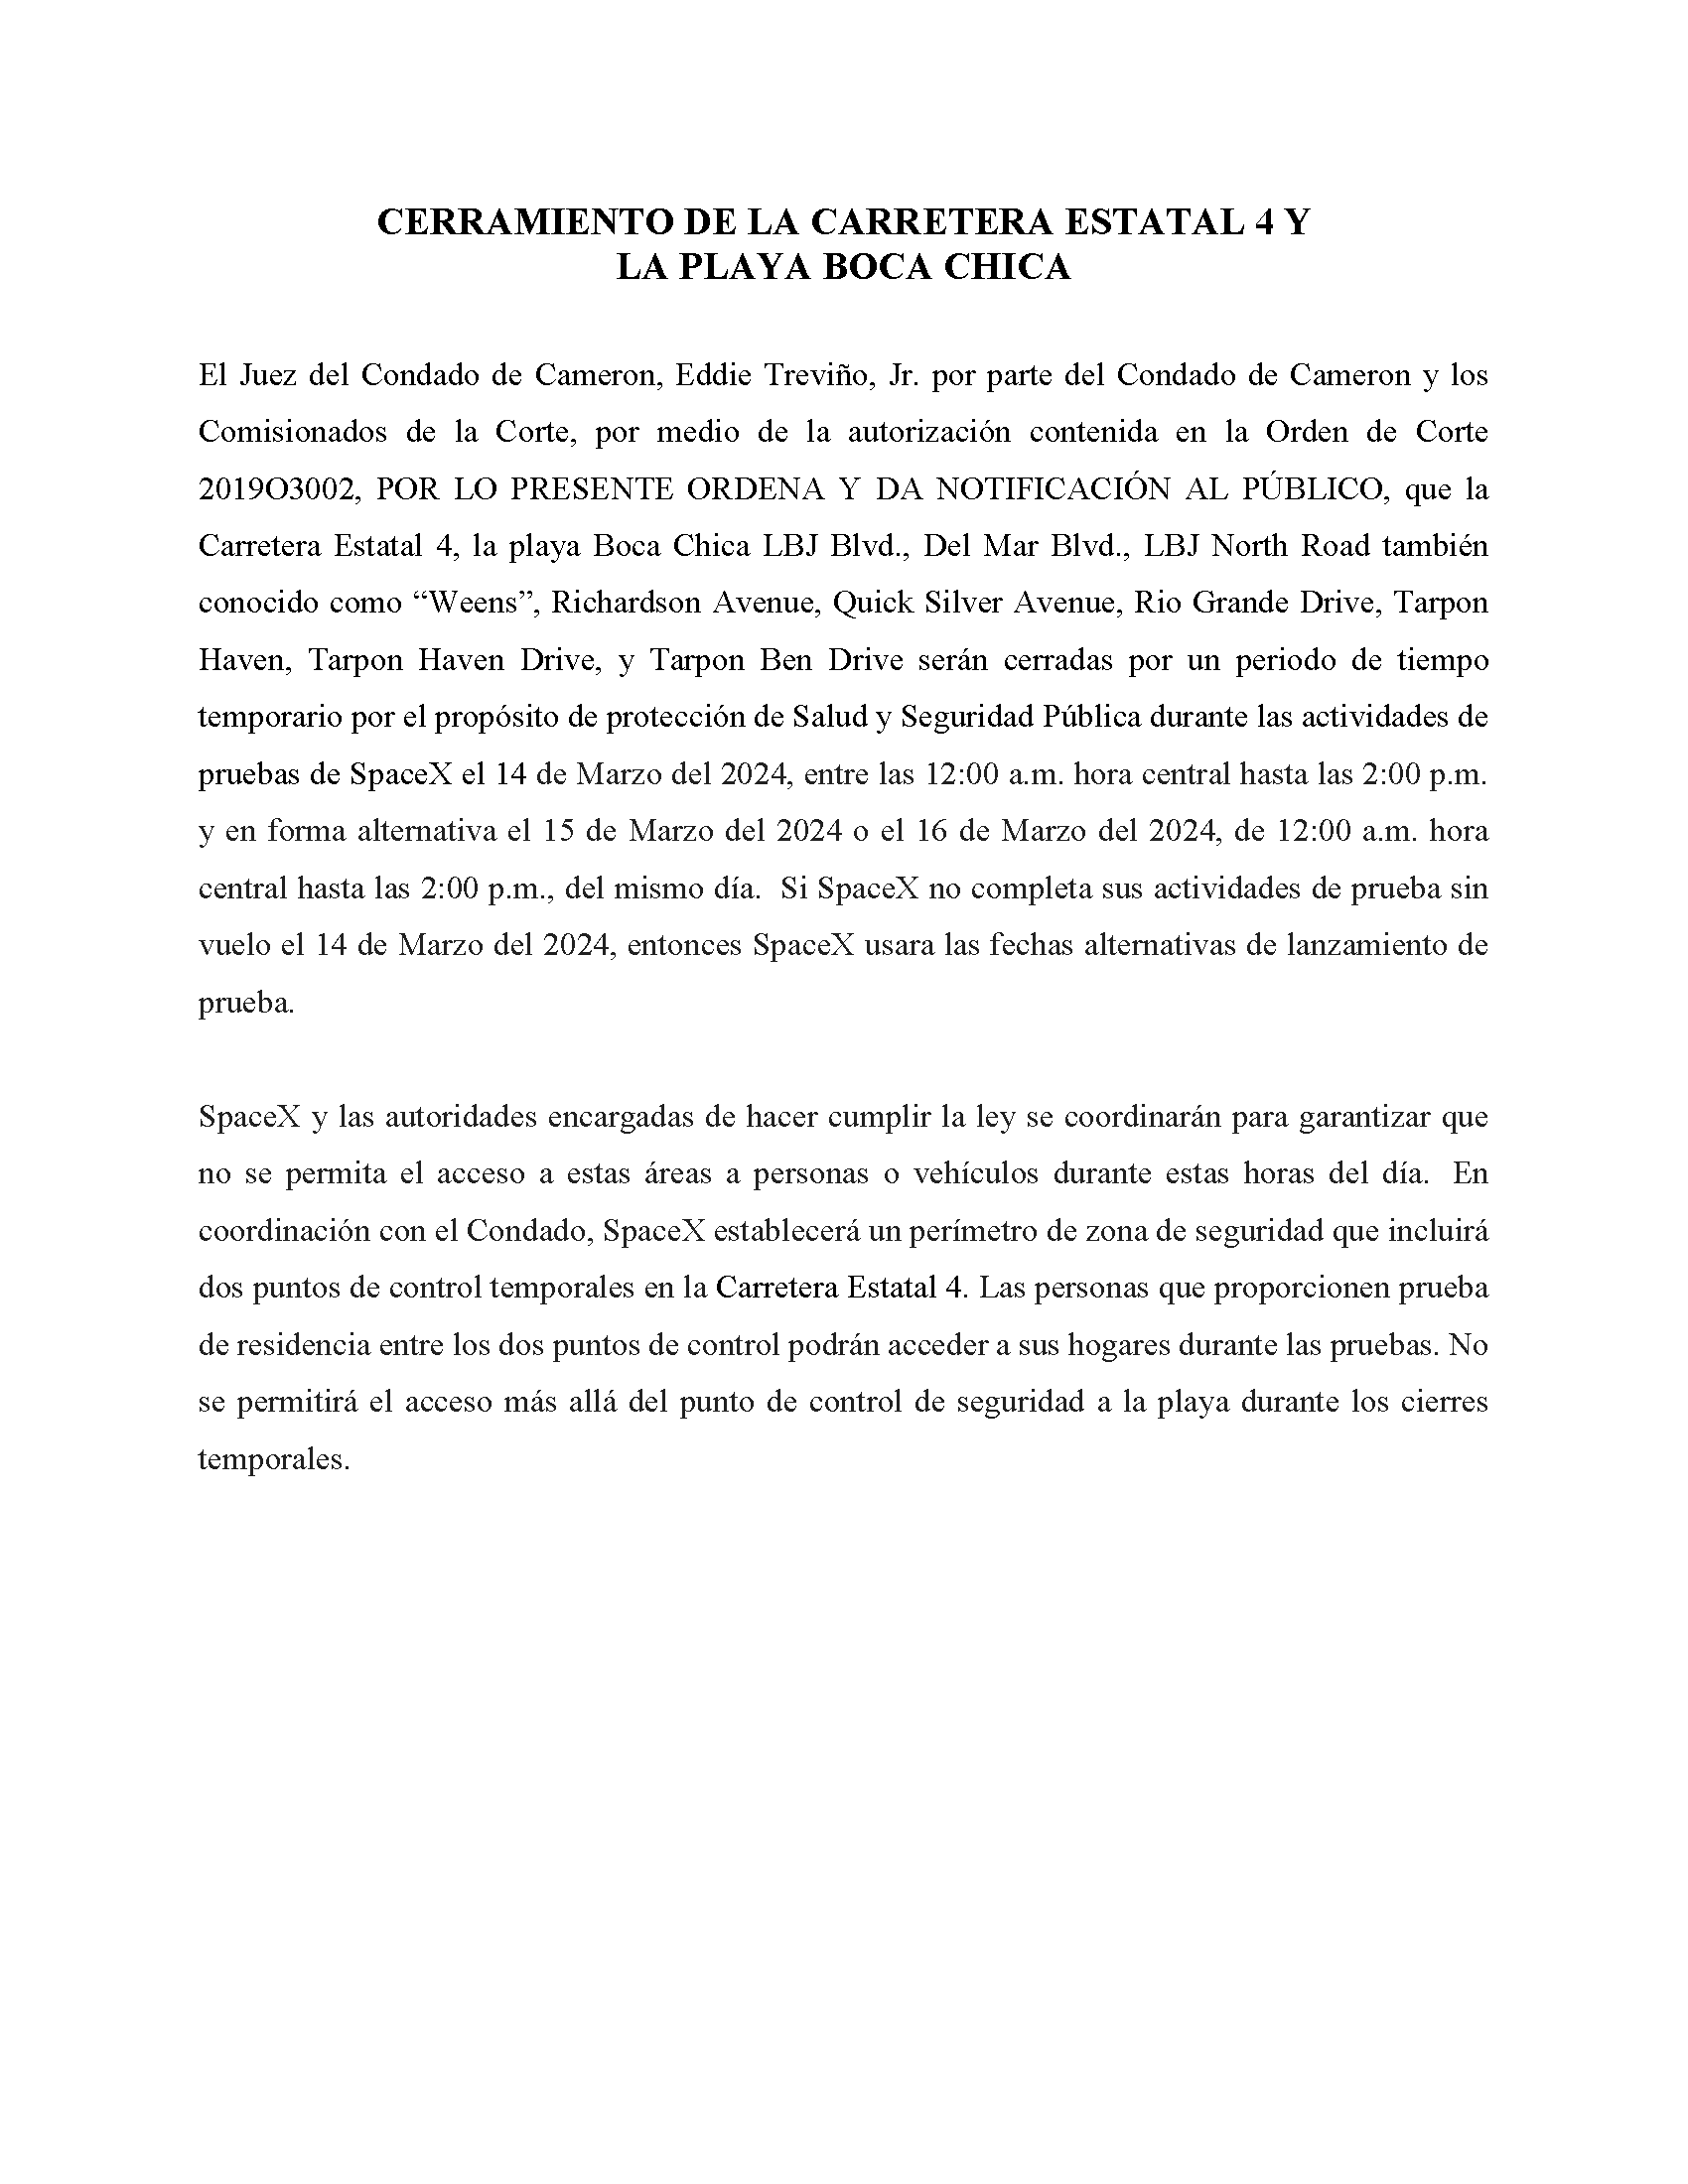 ORDER.CLOSURE OF HIGHWAY 4 Y LA PLAYA BOCA CHICA.SPANISH.03.14.2024